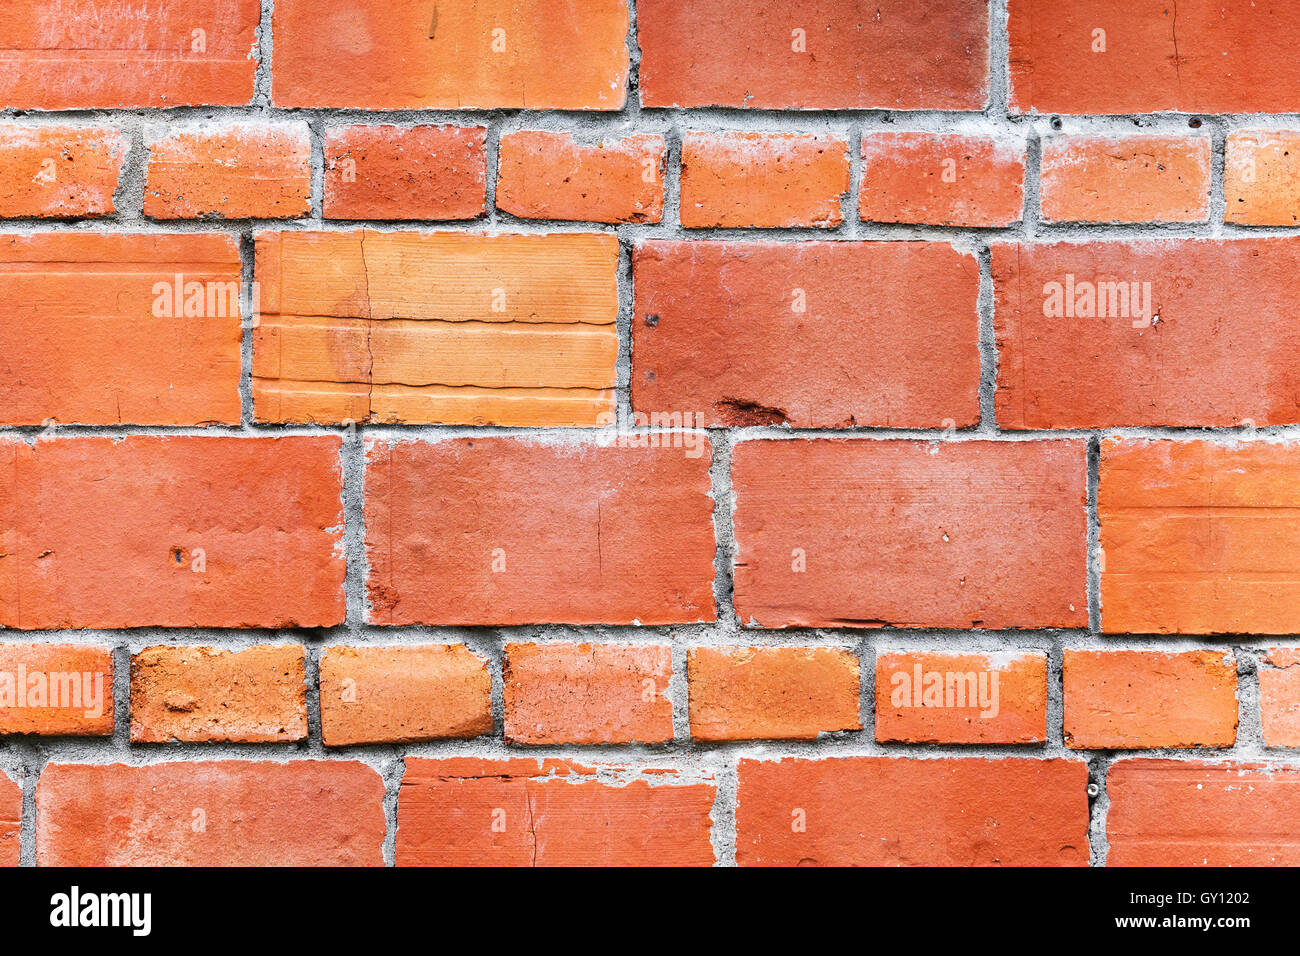 Bright red brick wall mansonry pattern, background photo texture Stock Photo